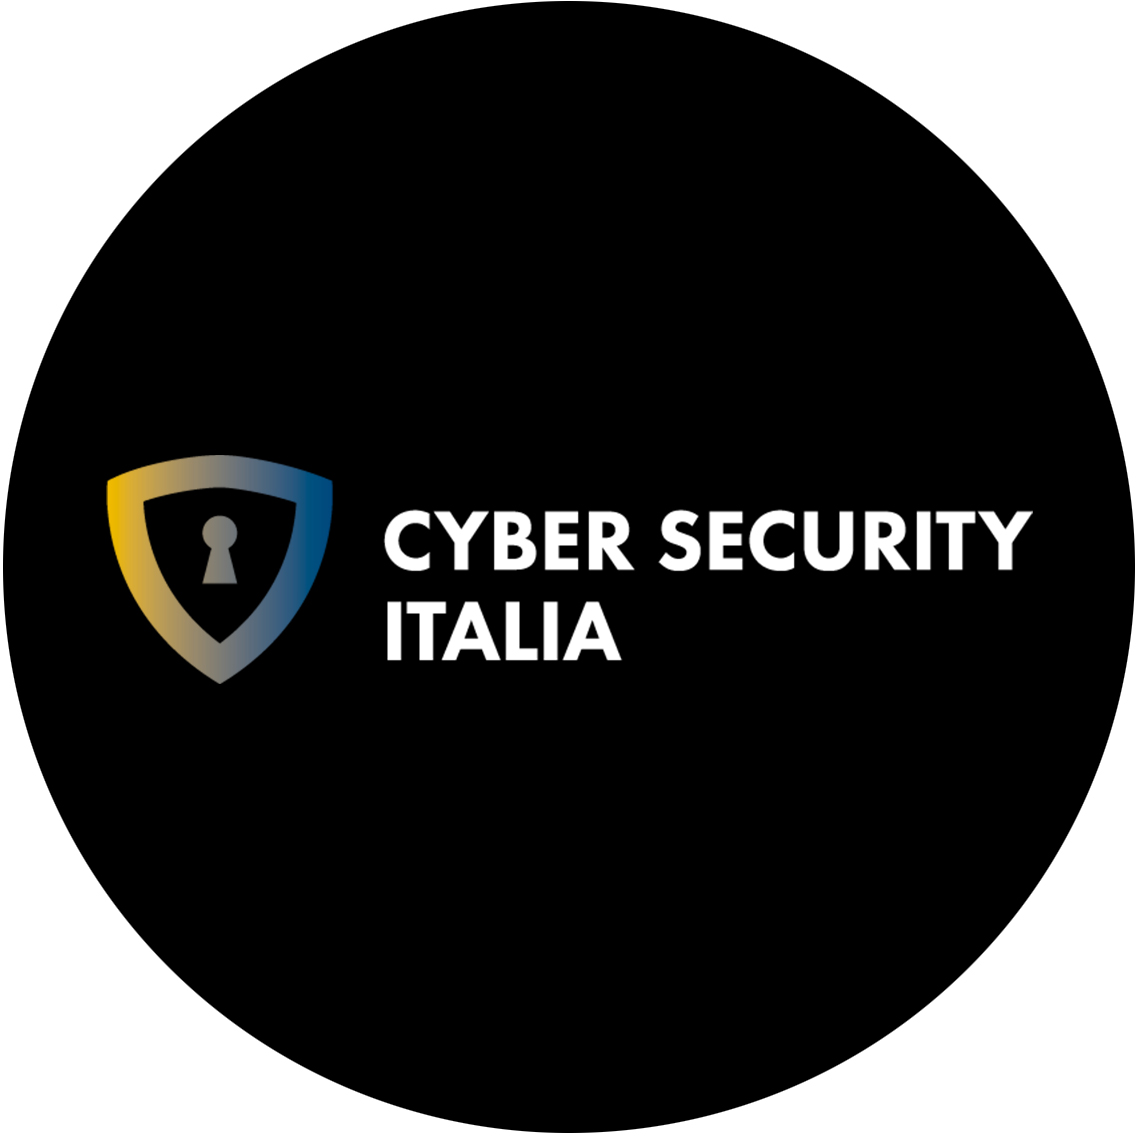 Cyber Security Italia